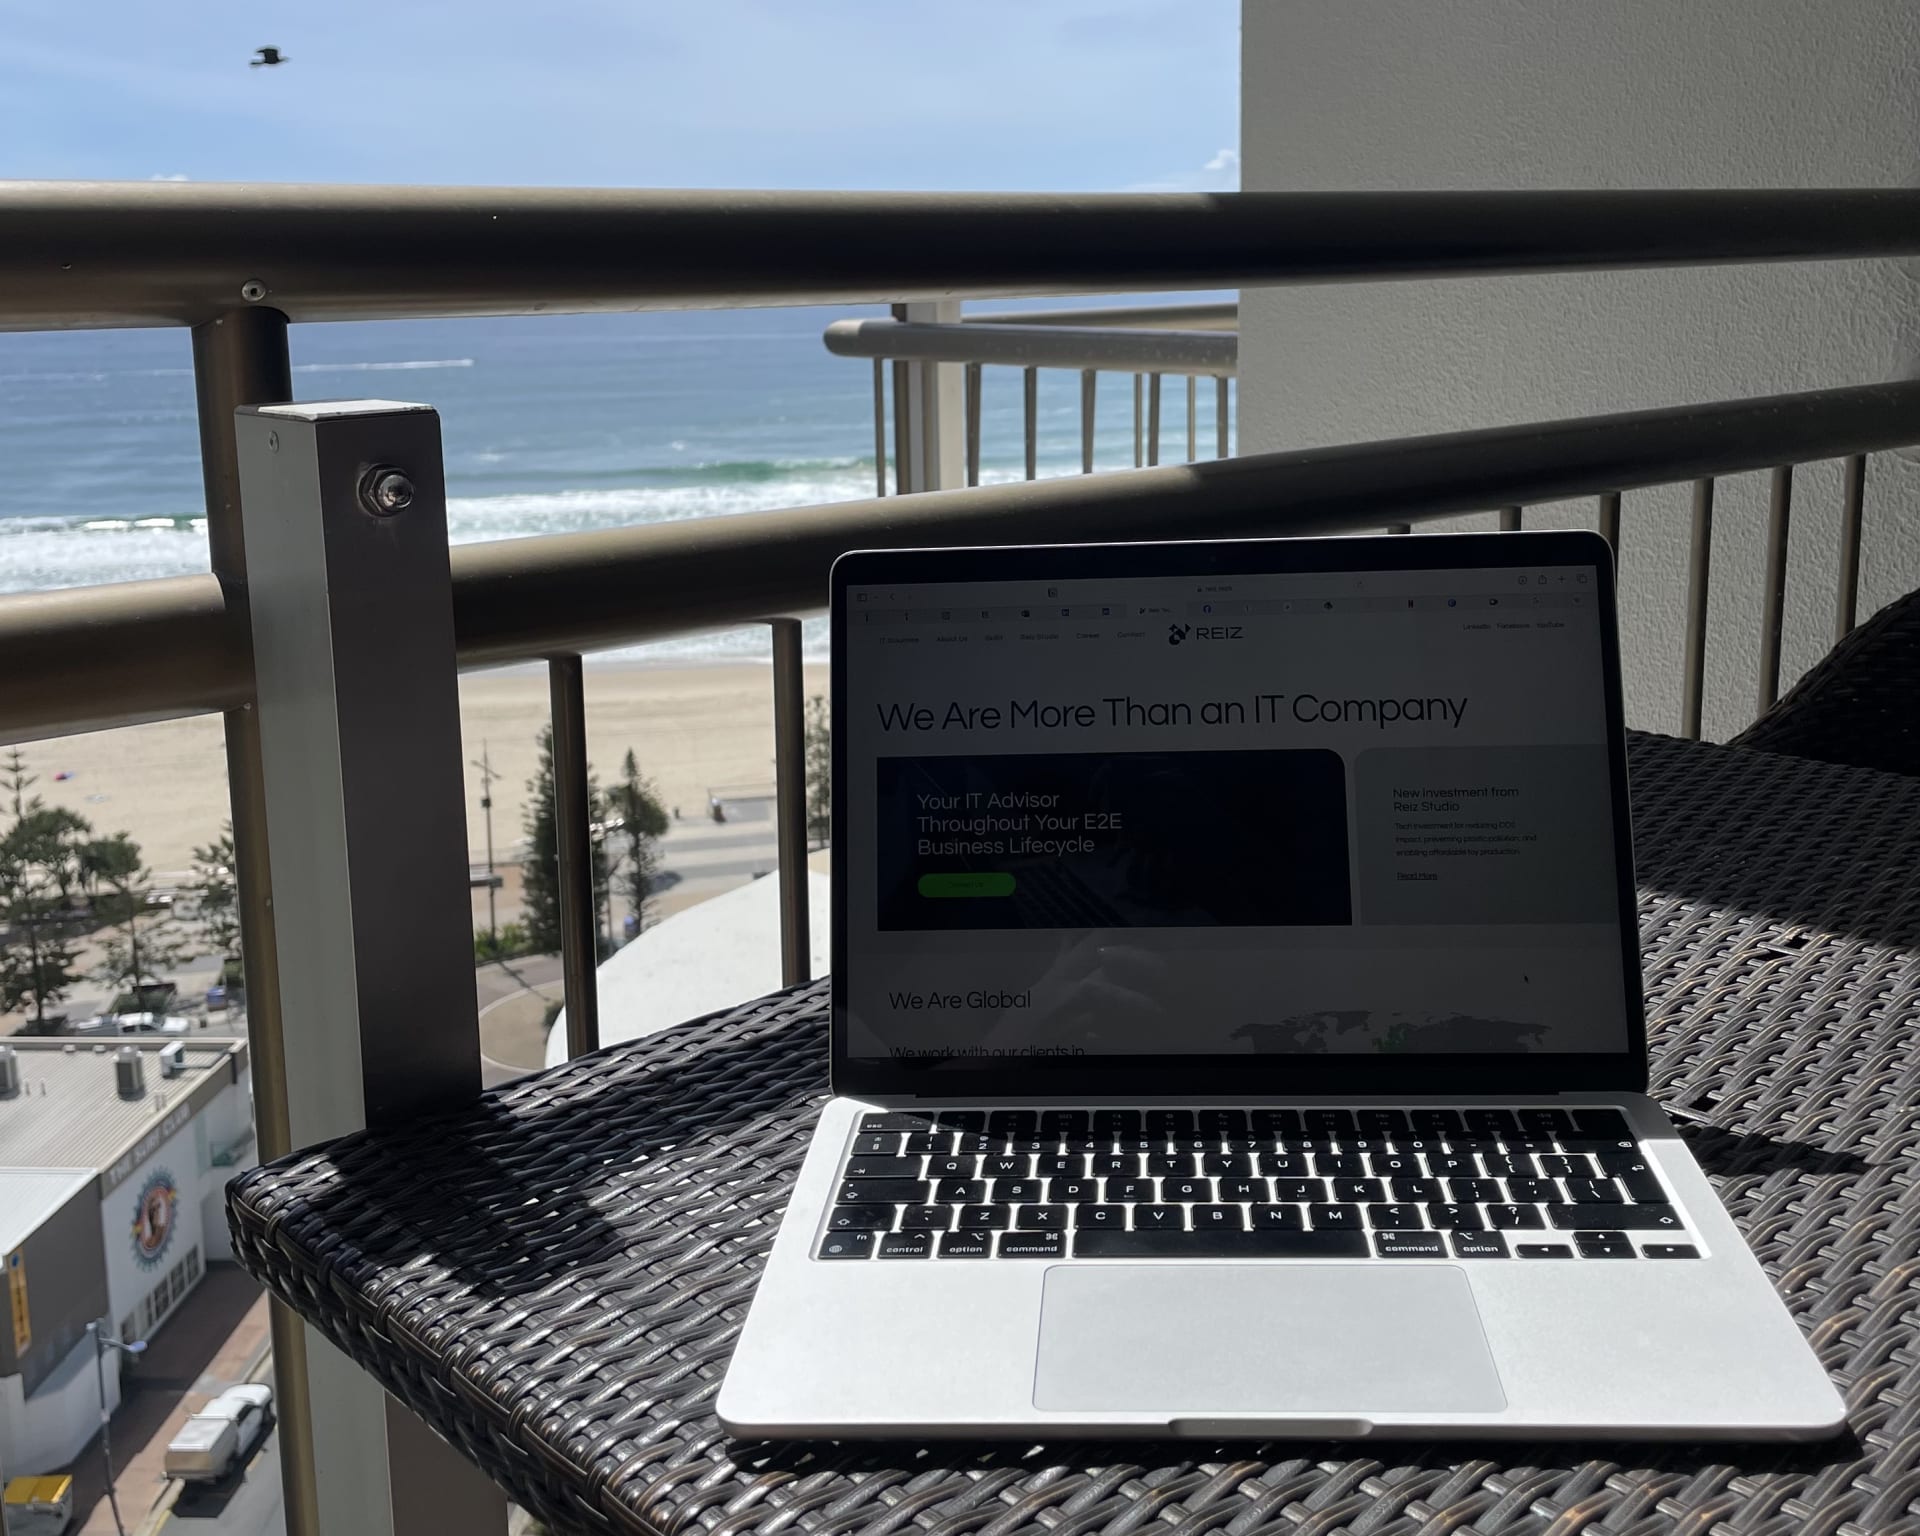 laptop, with Reiz Tech website, beach in the background